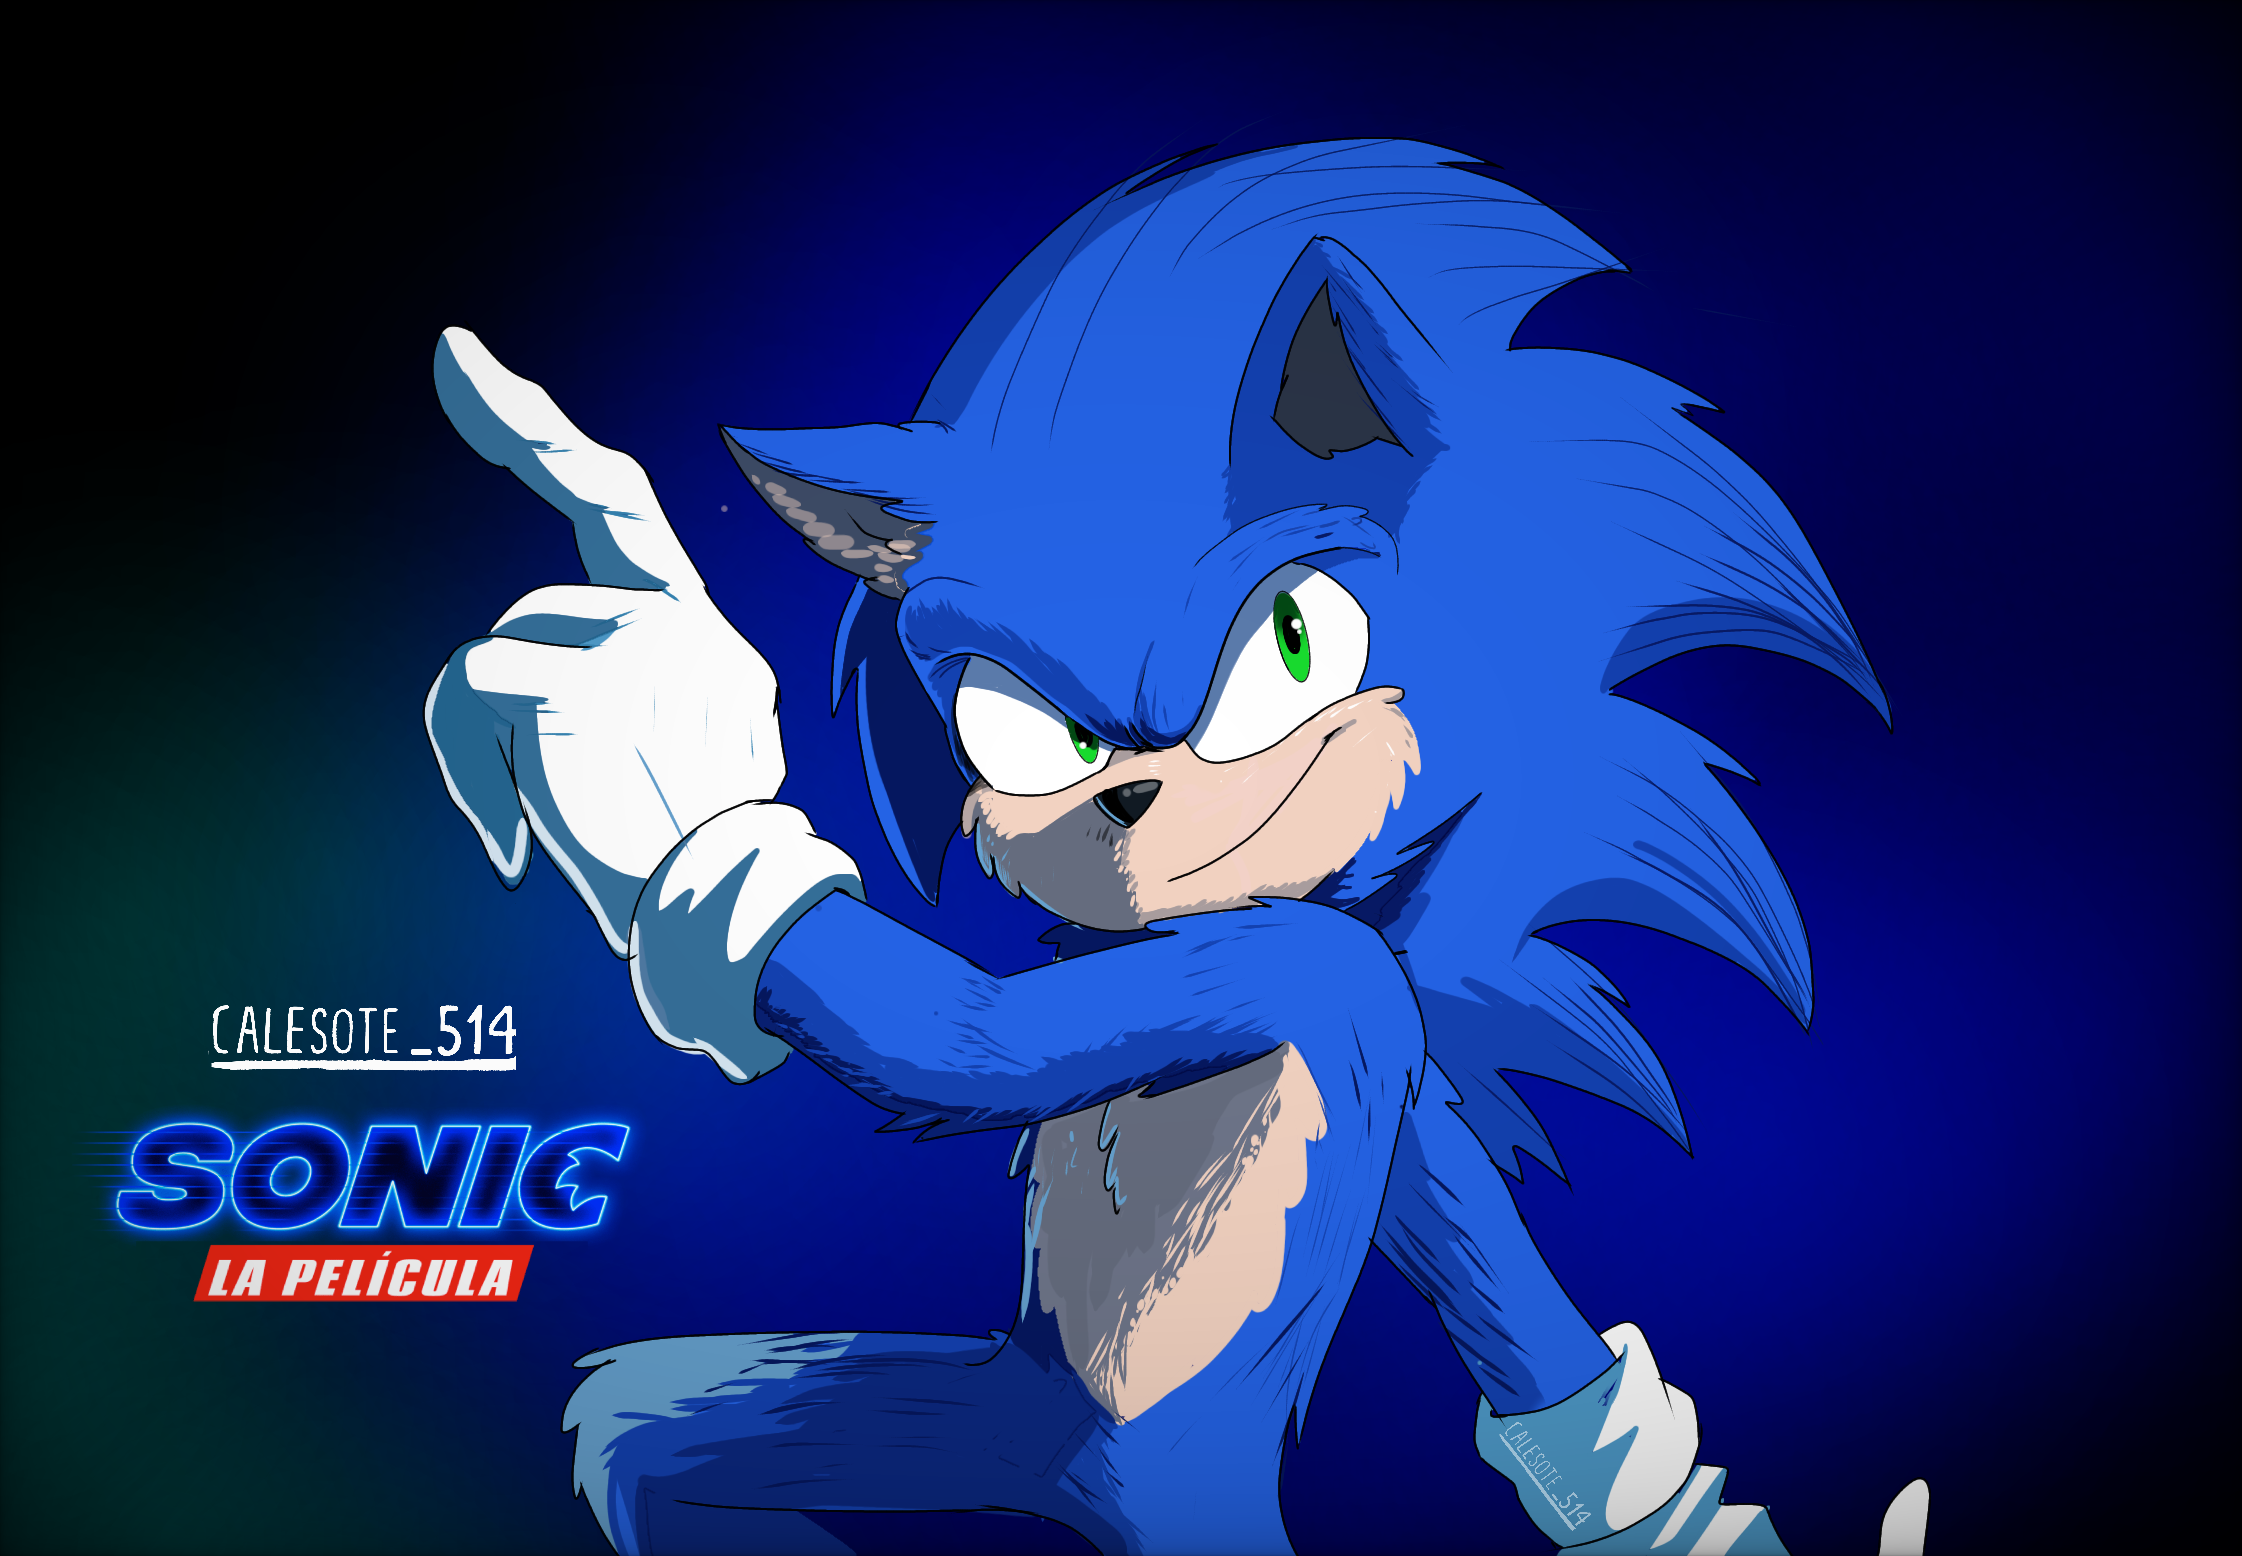 Sonic Movie Poster Redo! by JLuisJoni on DeviantArt